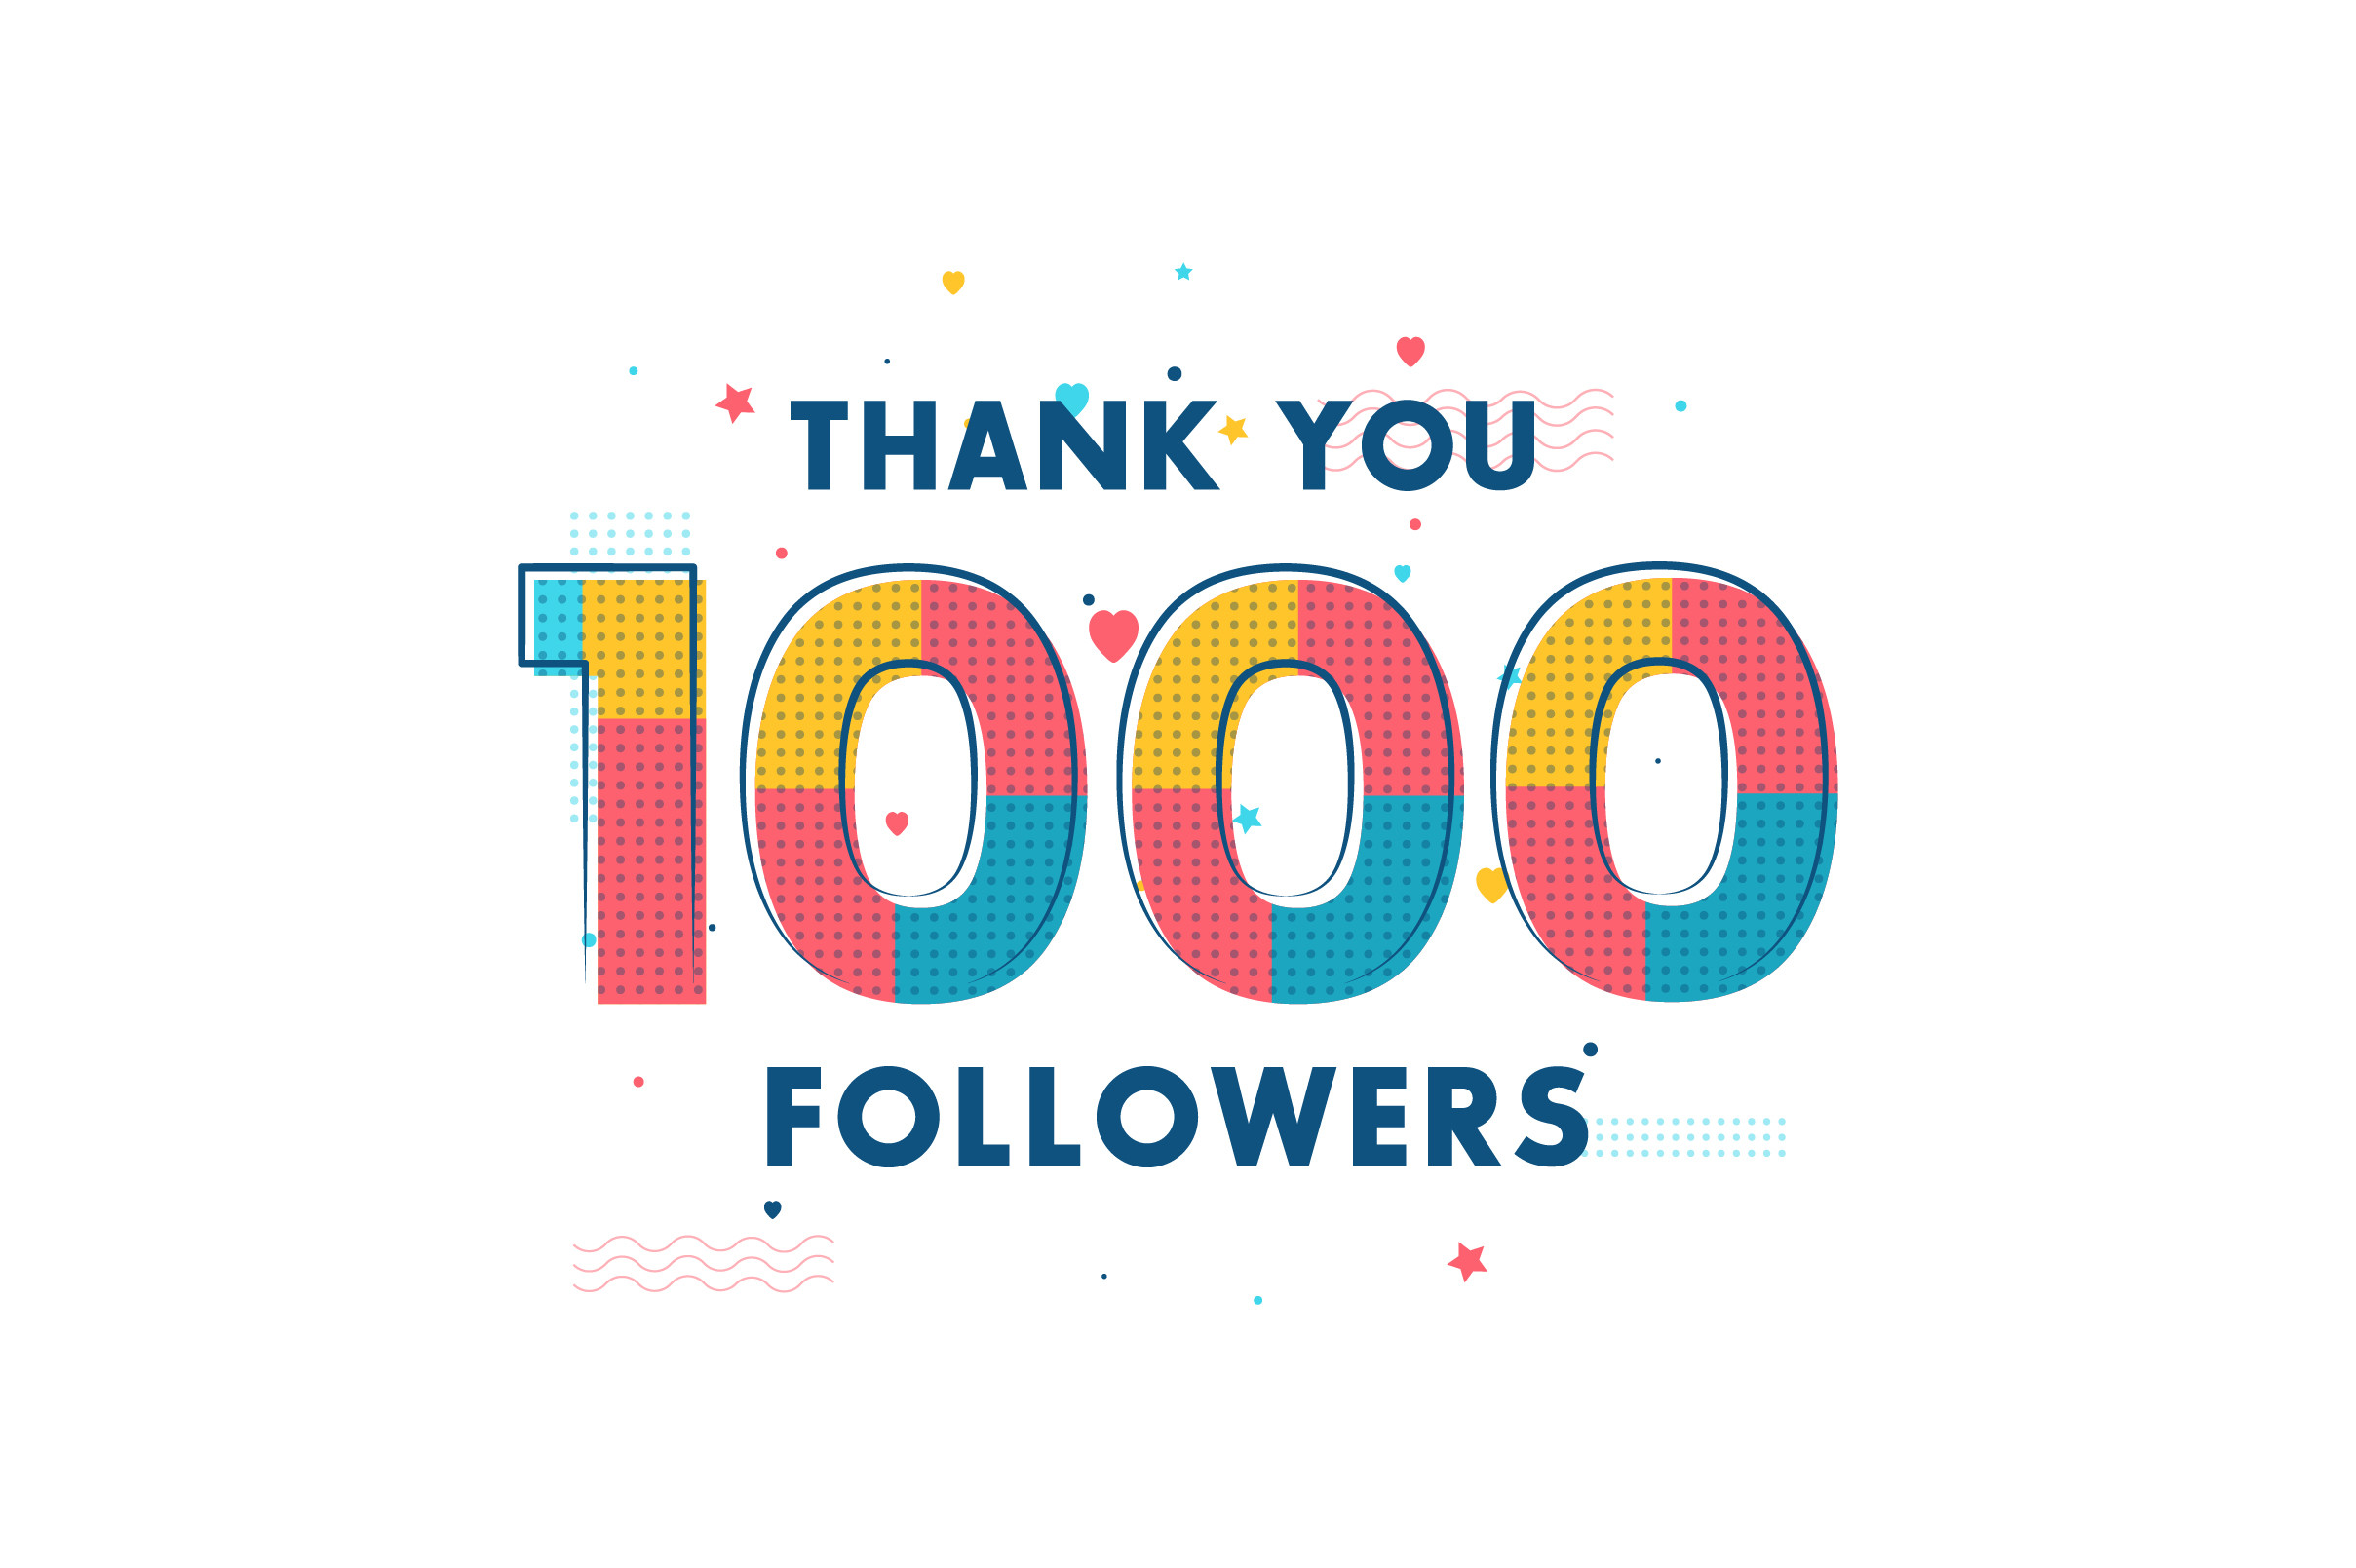 Thank You 1000 Followers Celebration Graphic By Stockia · Creative Fabrica